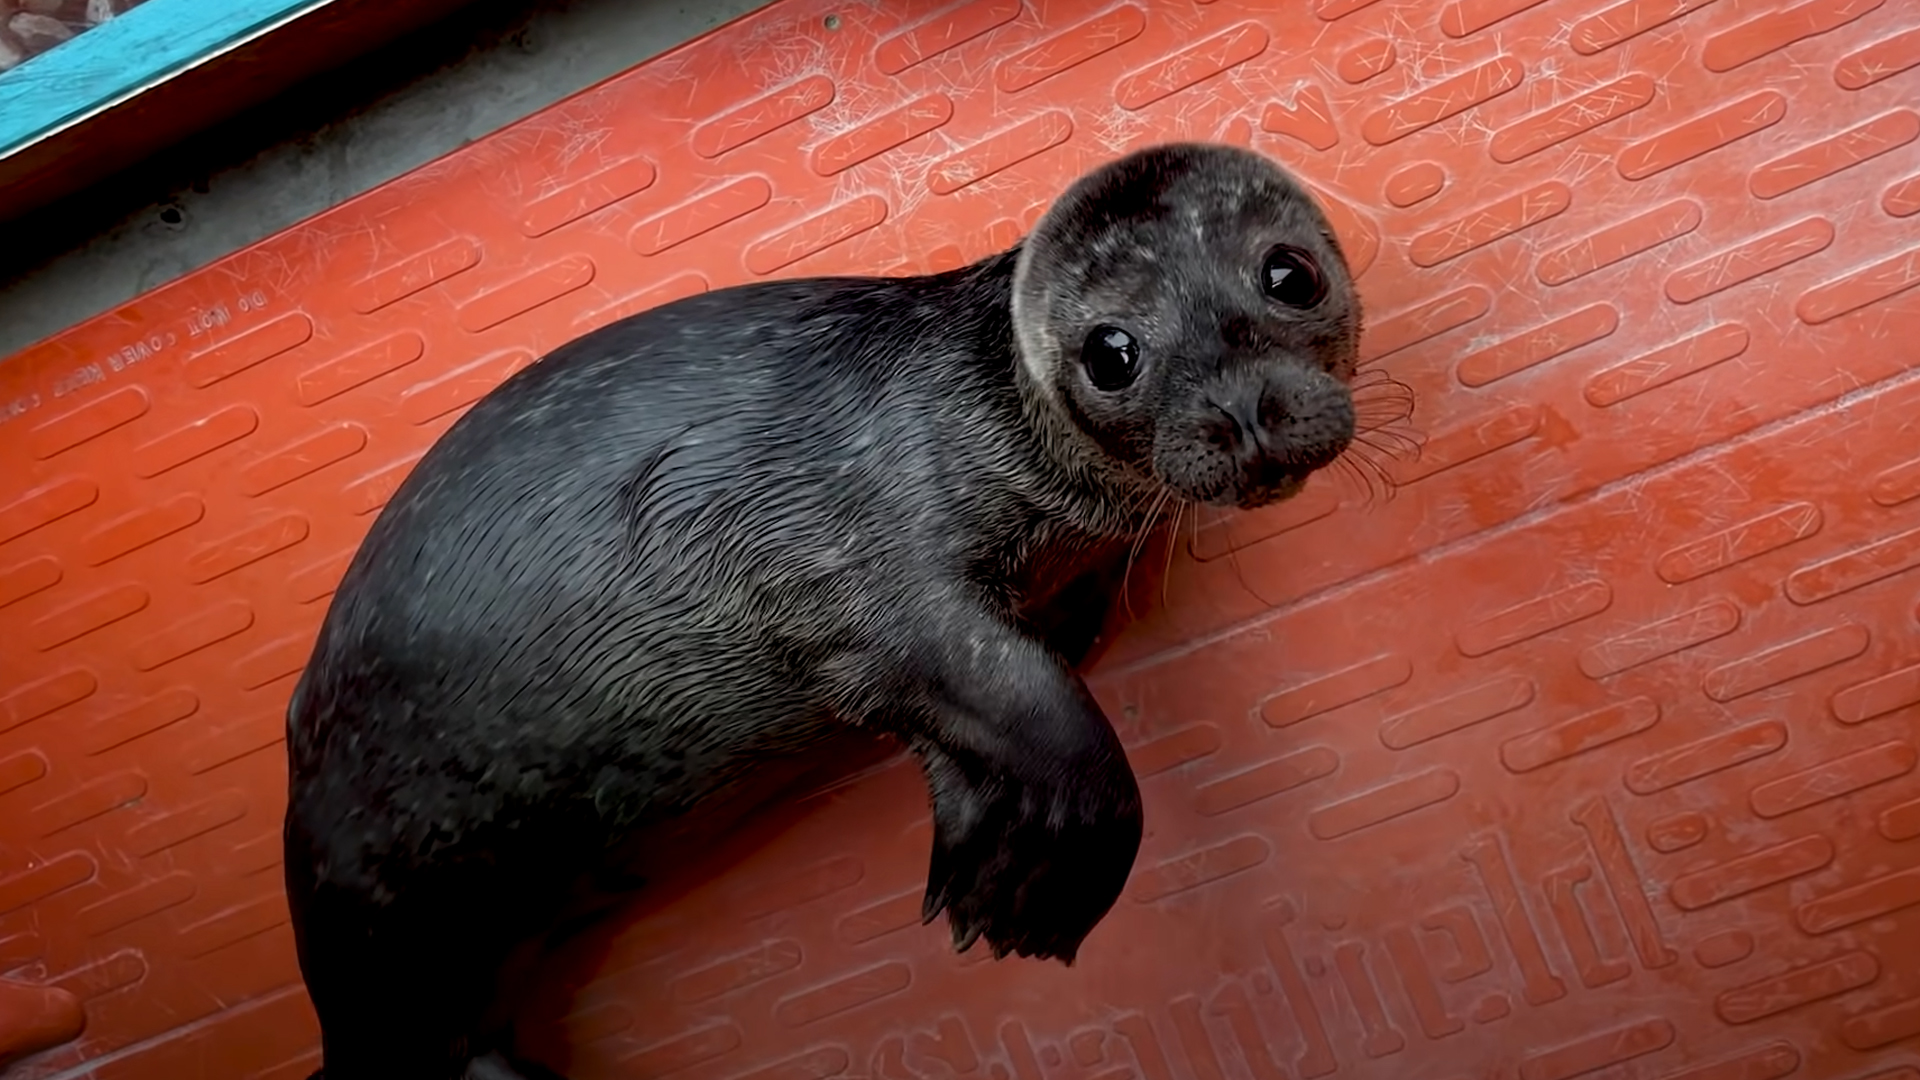 Seal baby Baby seal